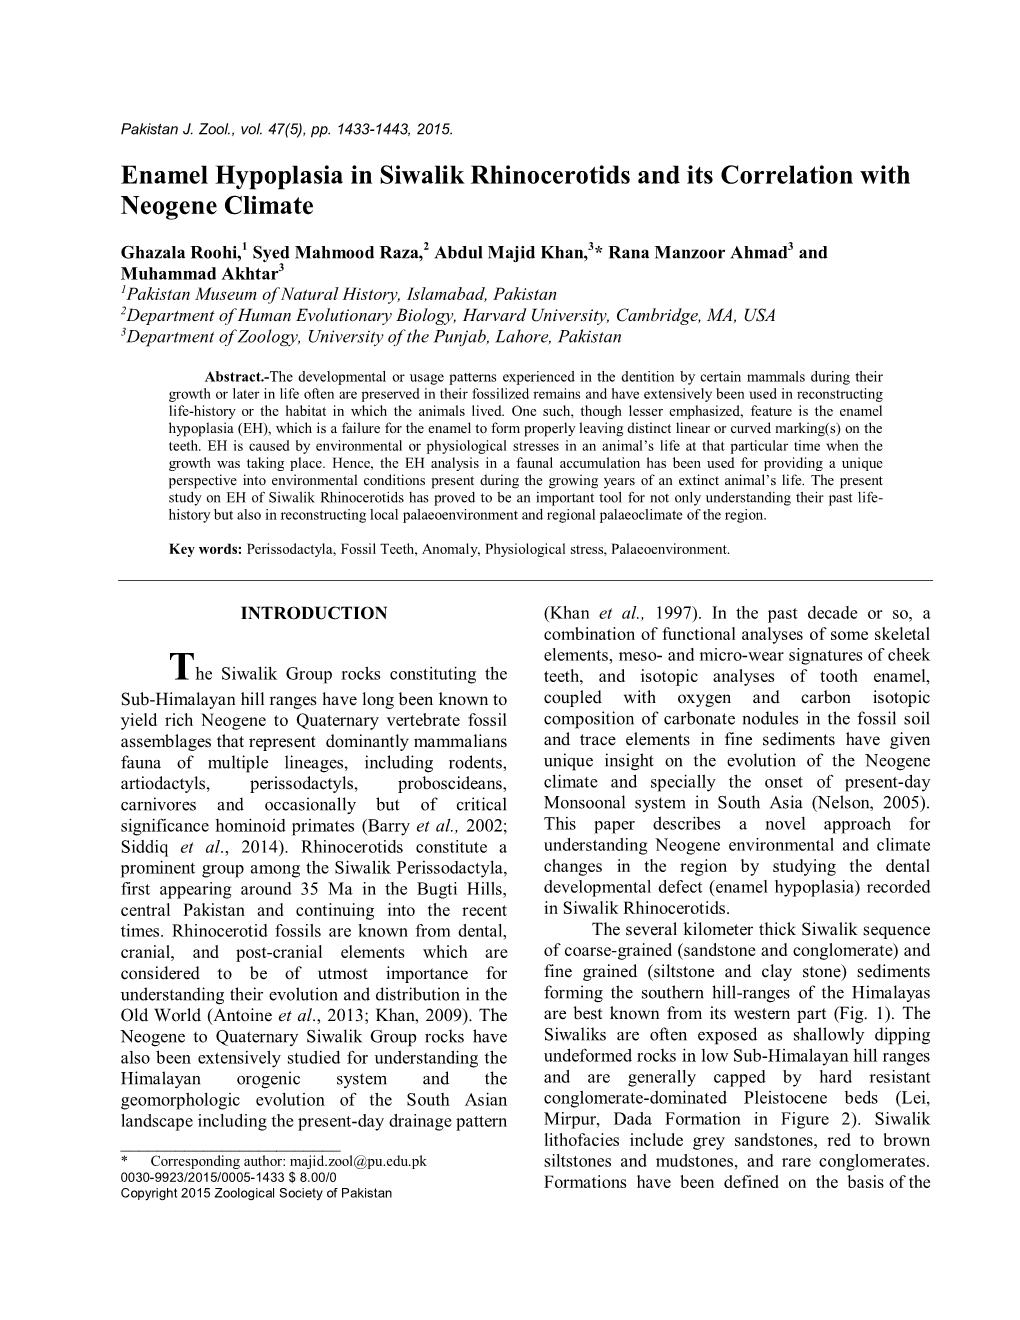 Enamel Hypoplasia in Siwalik Rhinocerotids and Its Correlation with Neogene Climate